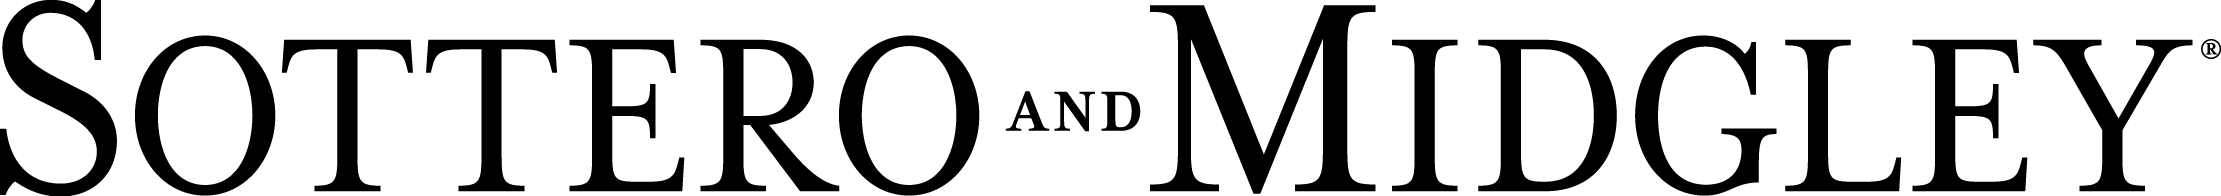 SotteroAndMidgley-Logo-Black